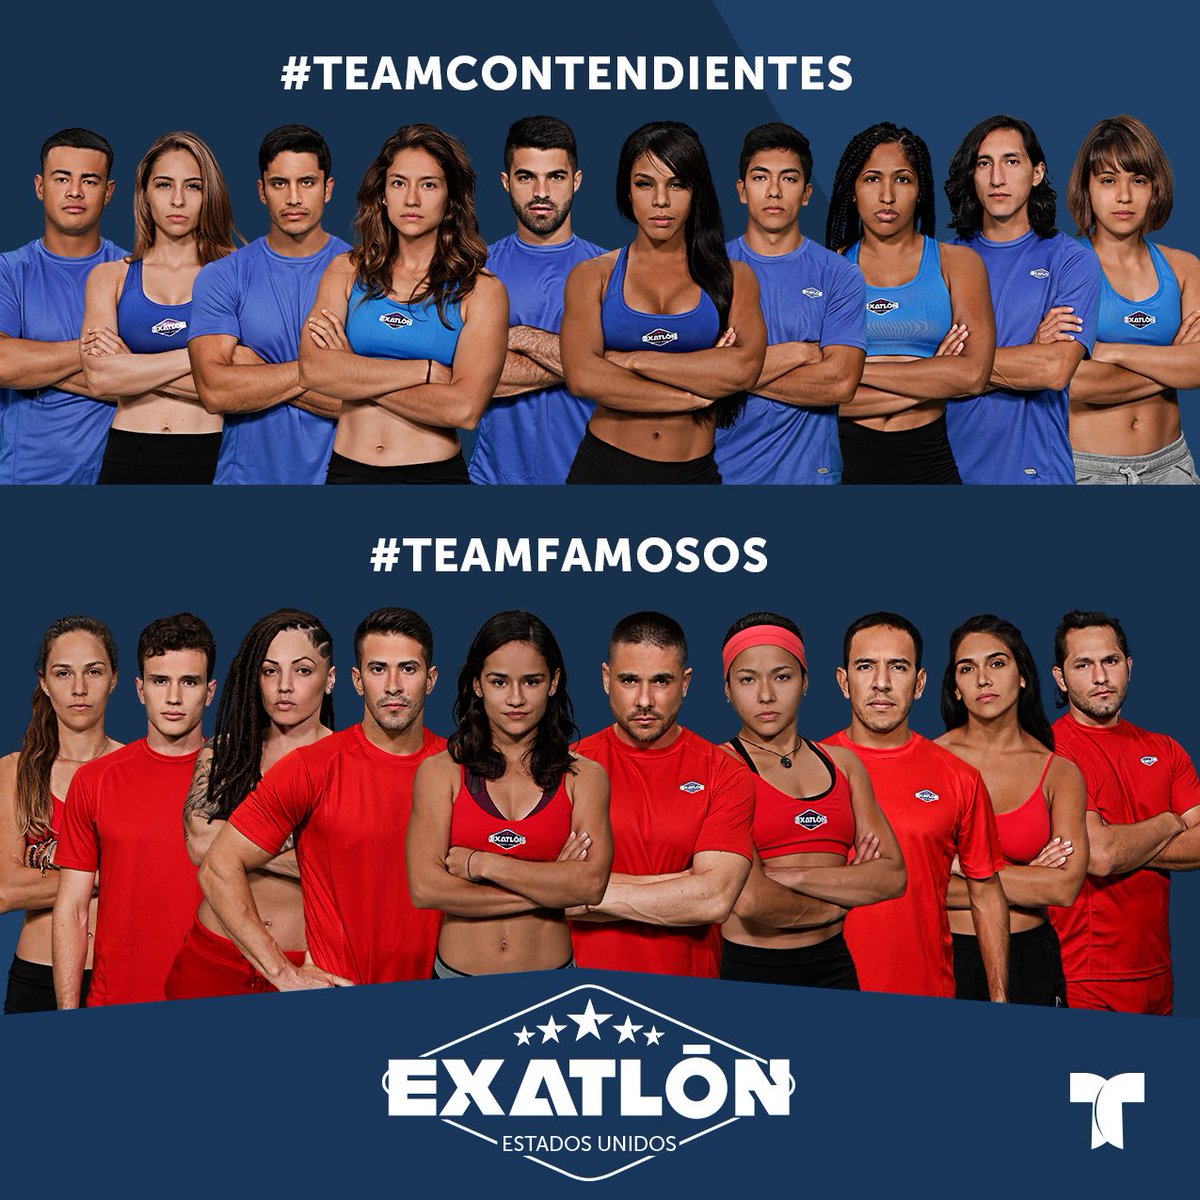 Exatlon Estados Unidos teams (Telemundo)